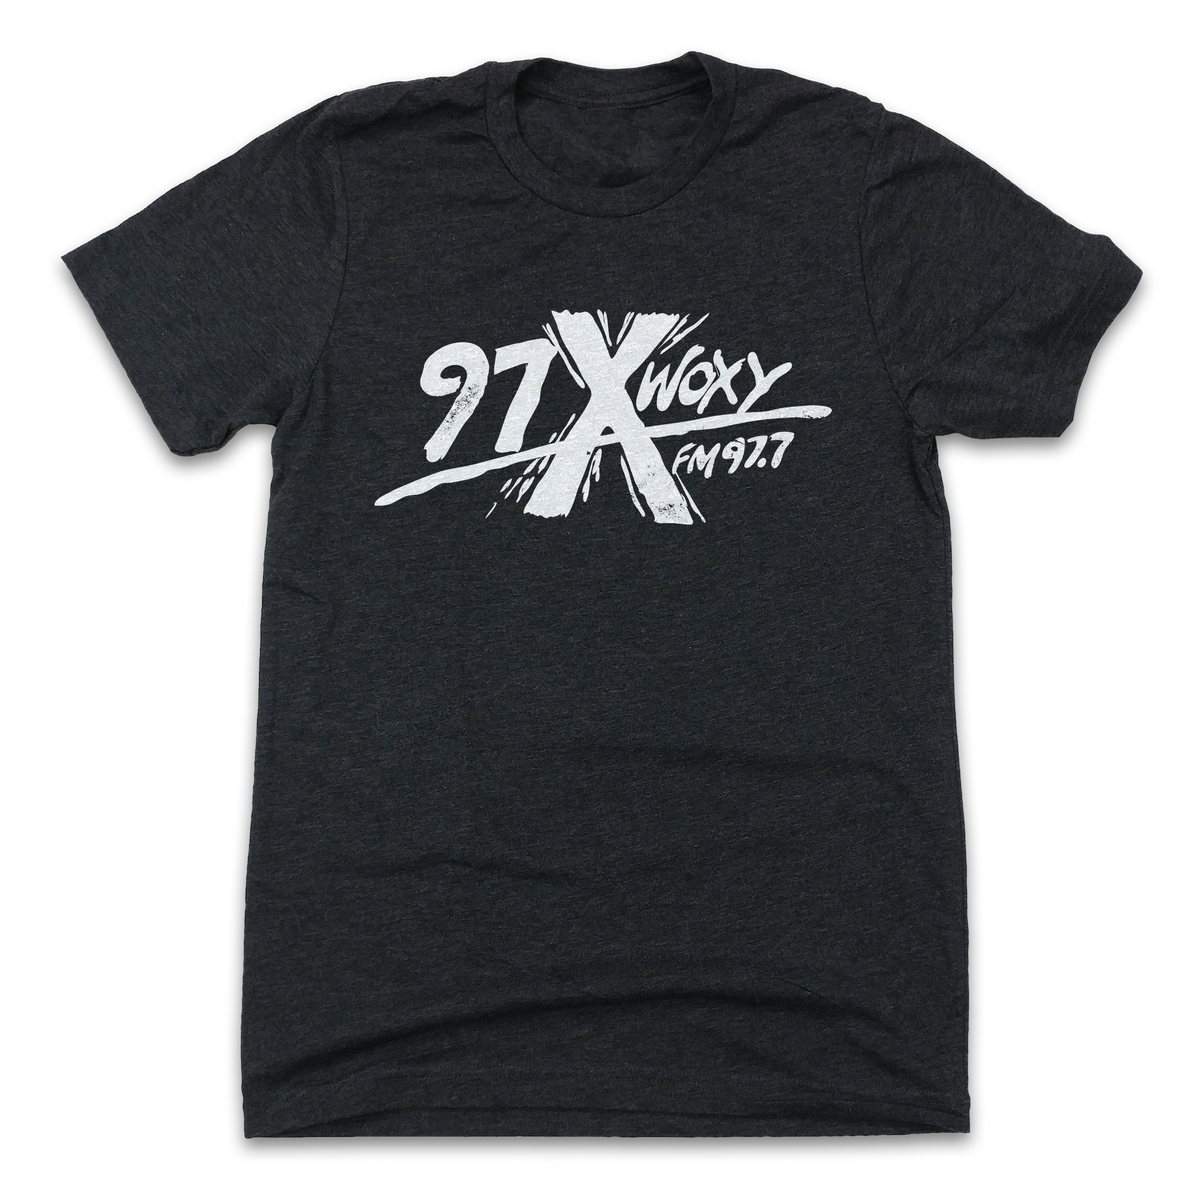 97X WOXY - Old School Shirts- Retro Sports T Shirts